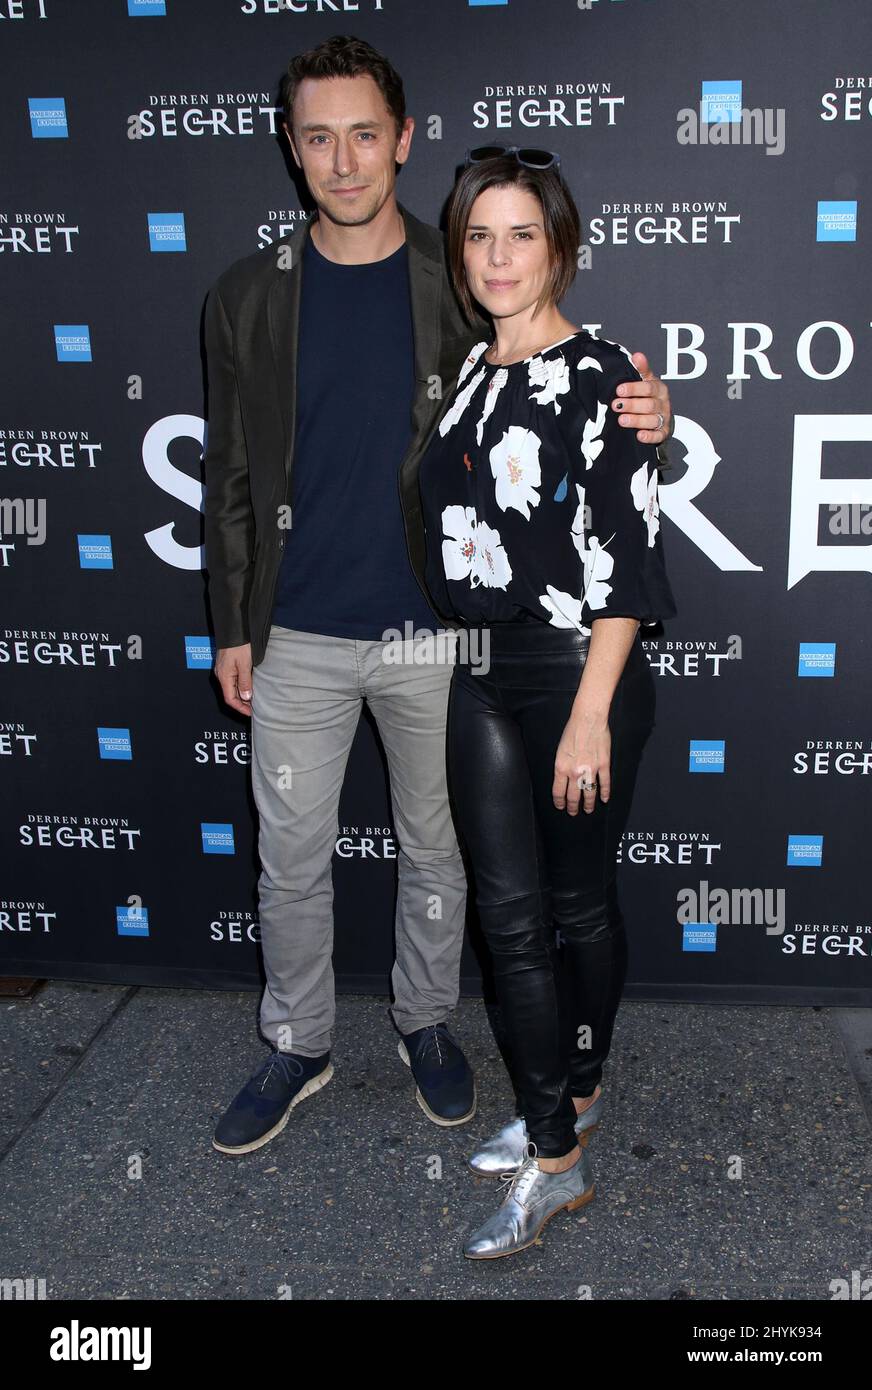 Neve Campbell & Husband JJ Feild attending the Derren Brown: Secret Broadway Opening Night - Arrivals held at The Cort Theatre Stock Photo